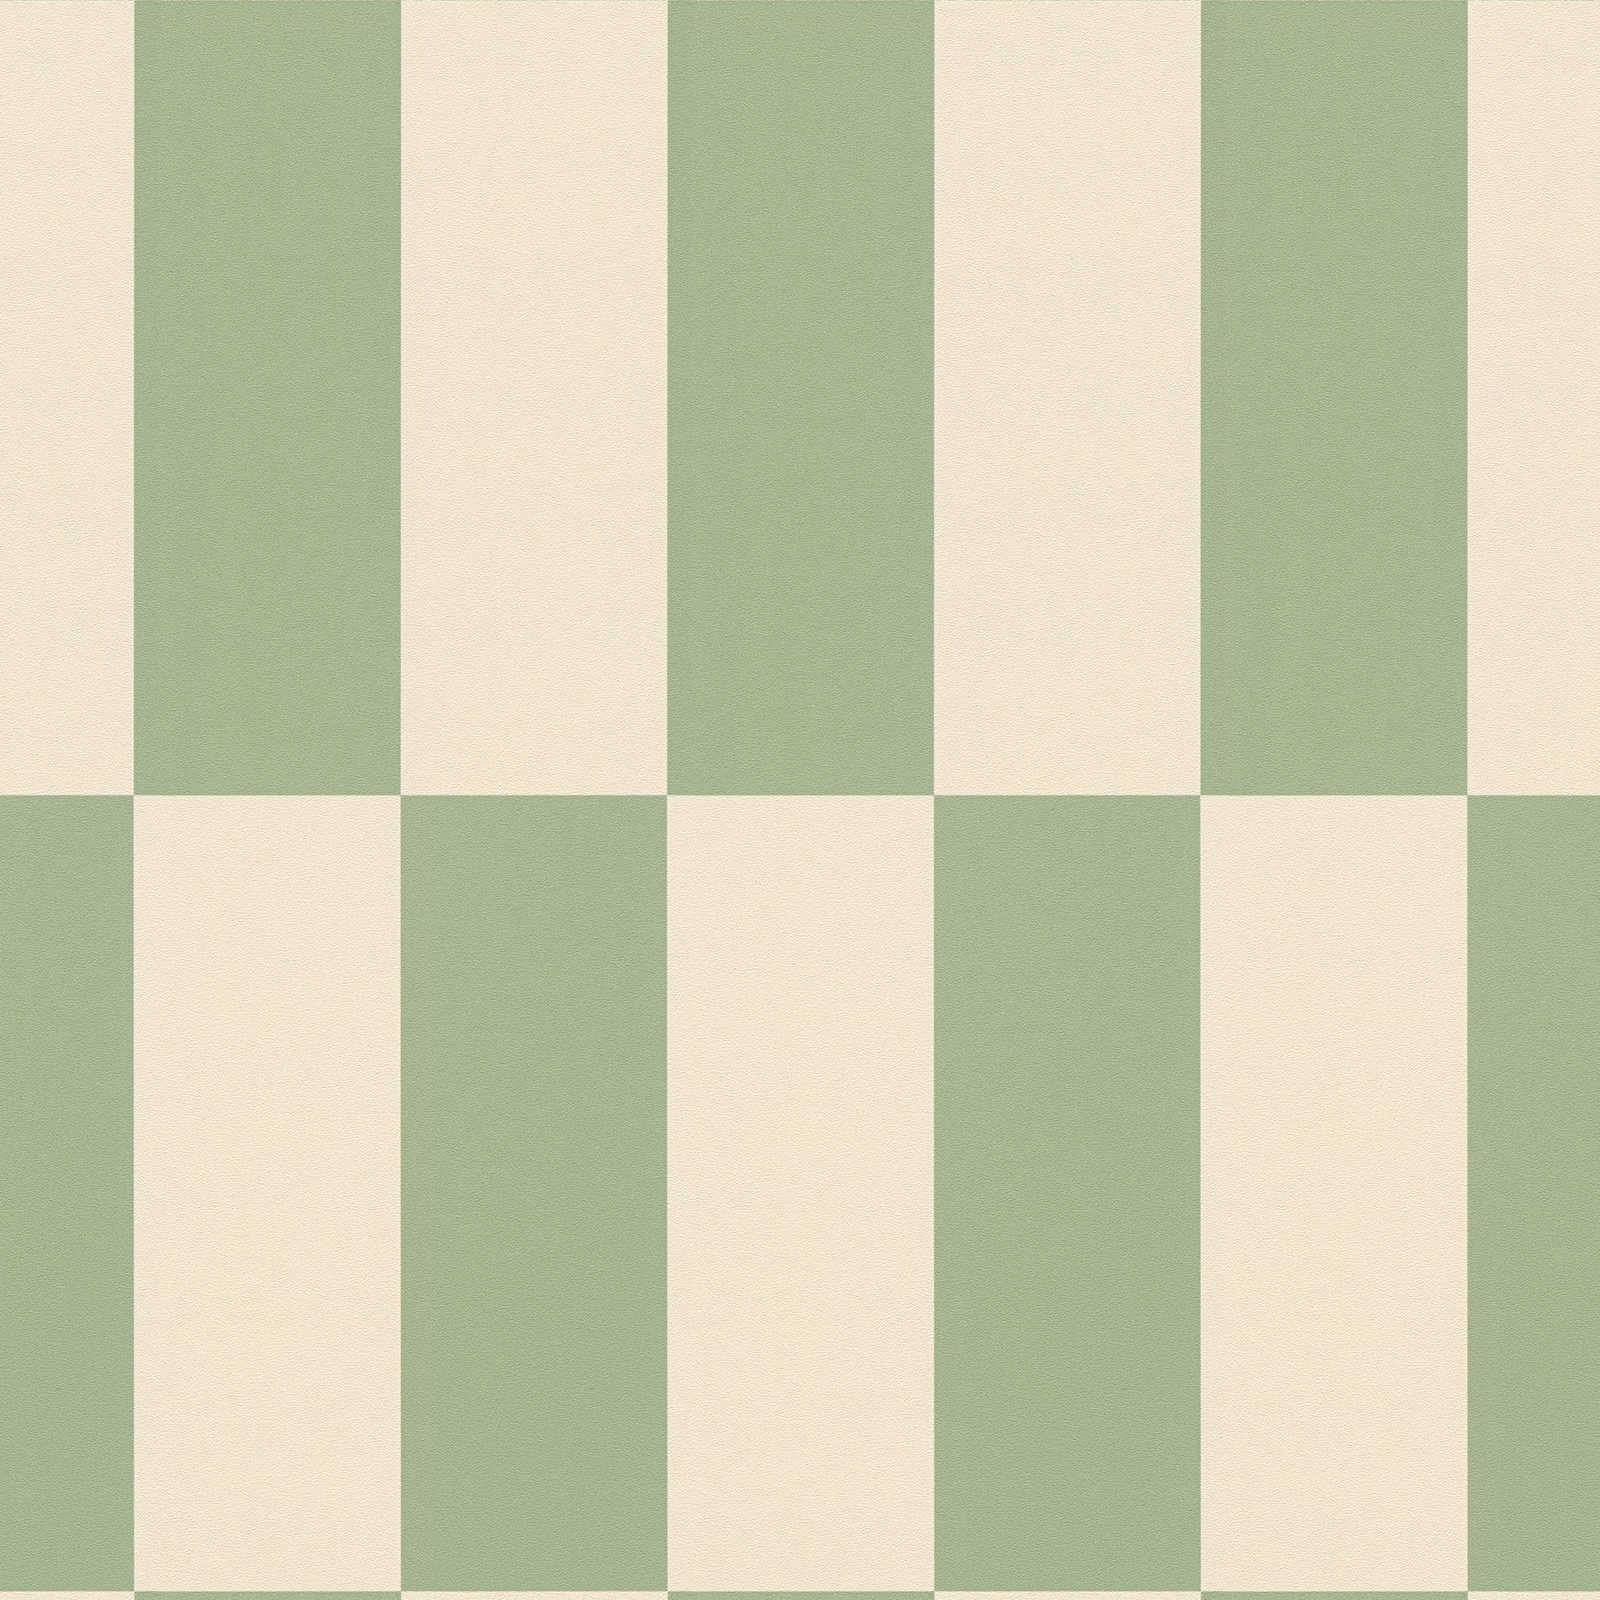             Non-woven wallpaper graphic squares two-tone - beige, green
        